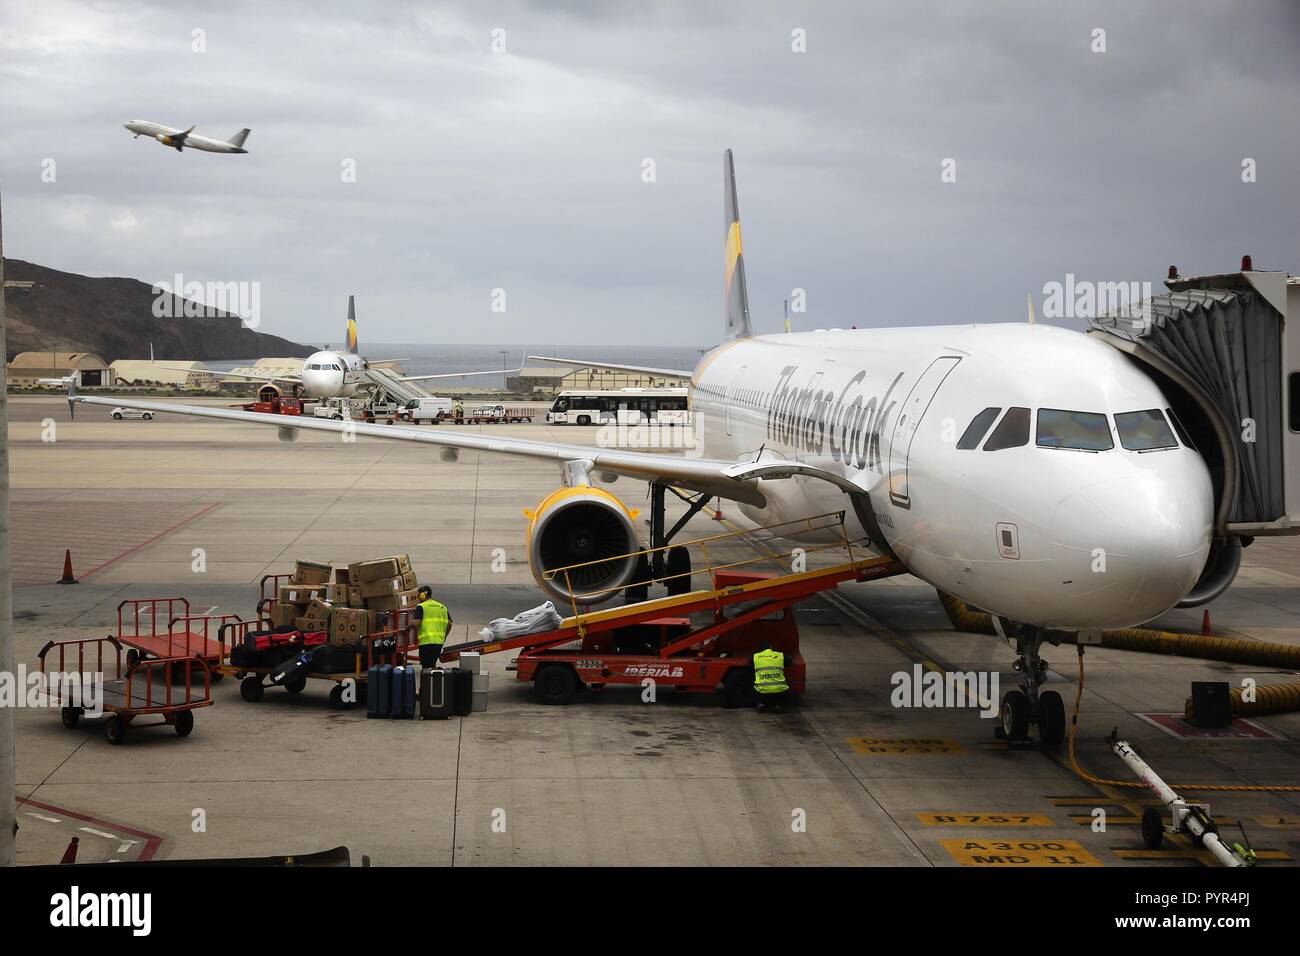 GRAN CANARIA, SPAIN - NOVEMBER 27, 2015: Thomas Cook Airbus A321 parked at Las Palmas Airport in Gran Canaria, Spain. Las Palmas Airport had 12 millio Stock Photo